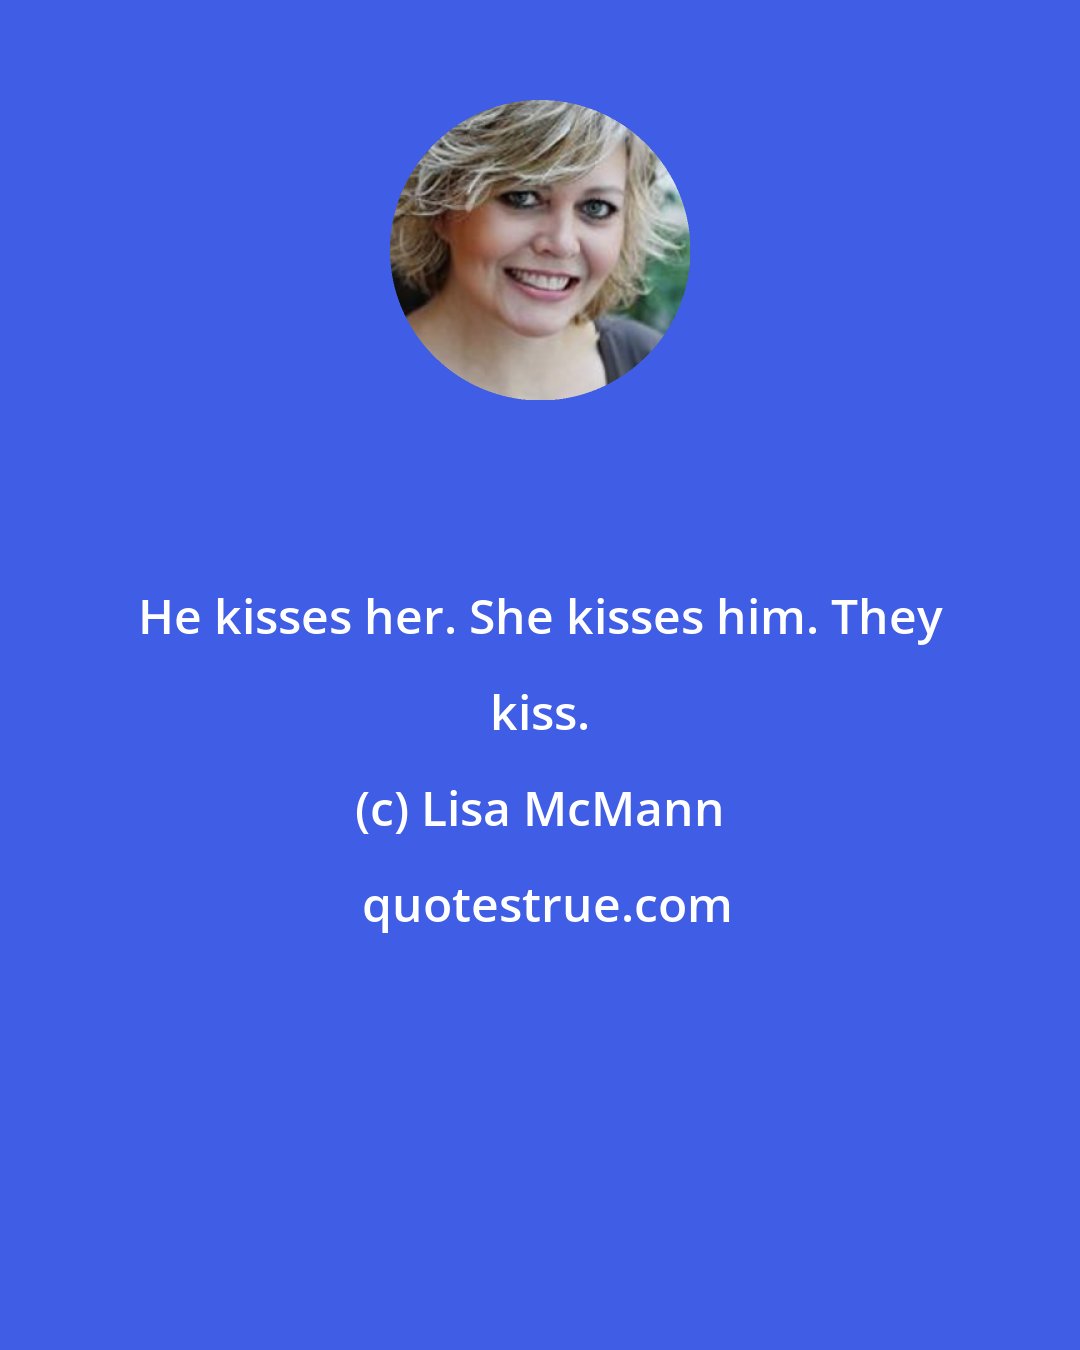 Lisa McMann: He kisses her. She kisses him. They kiss.